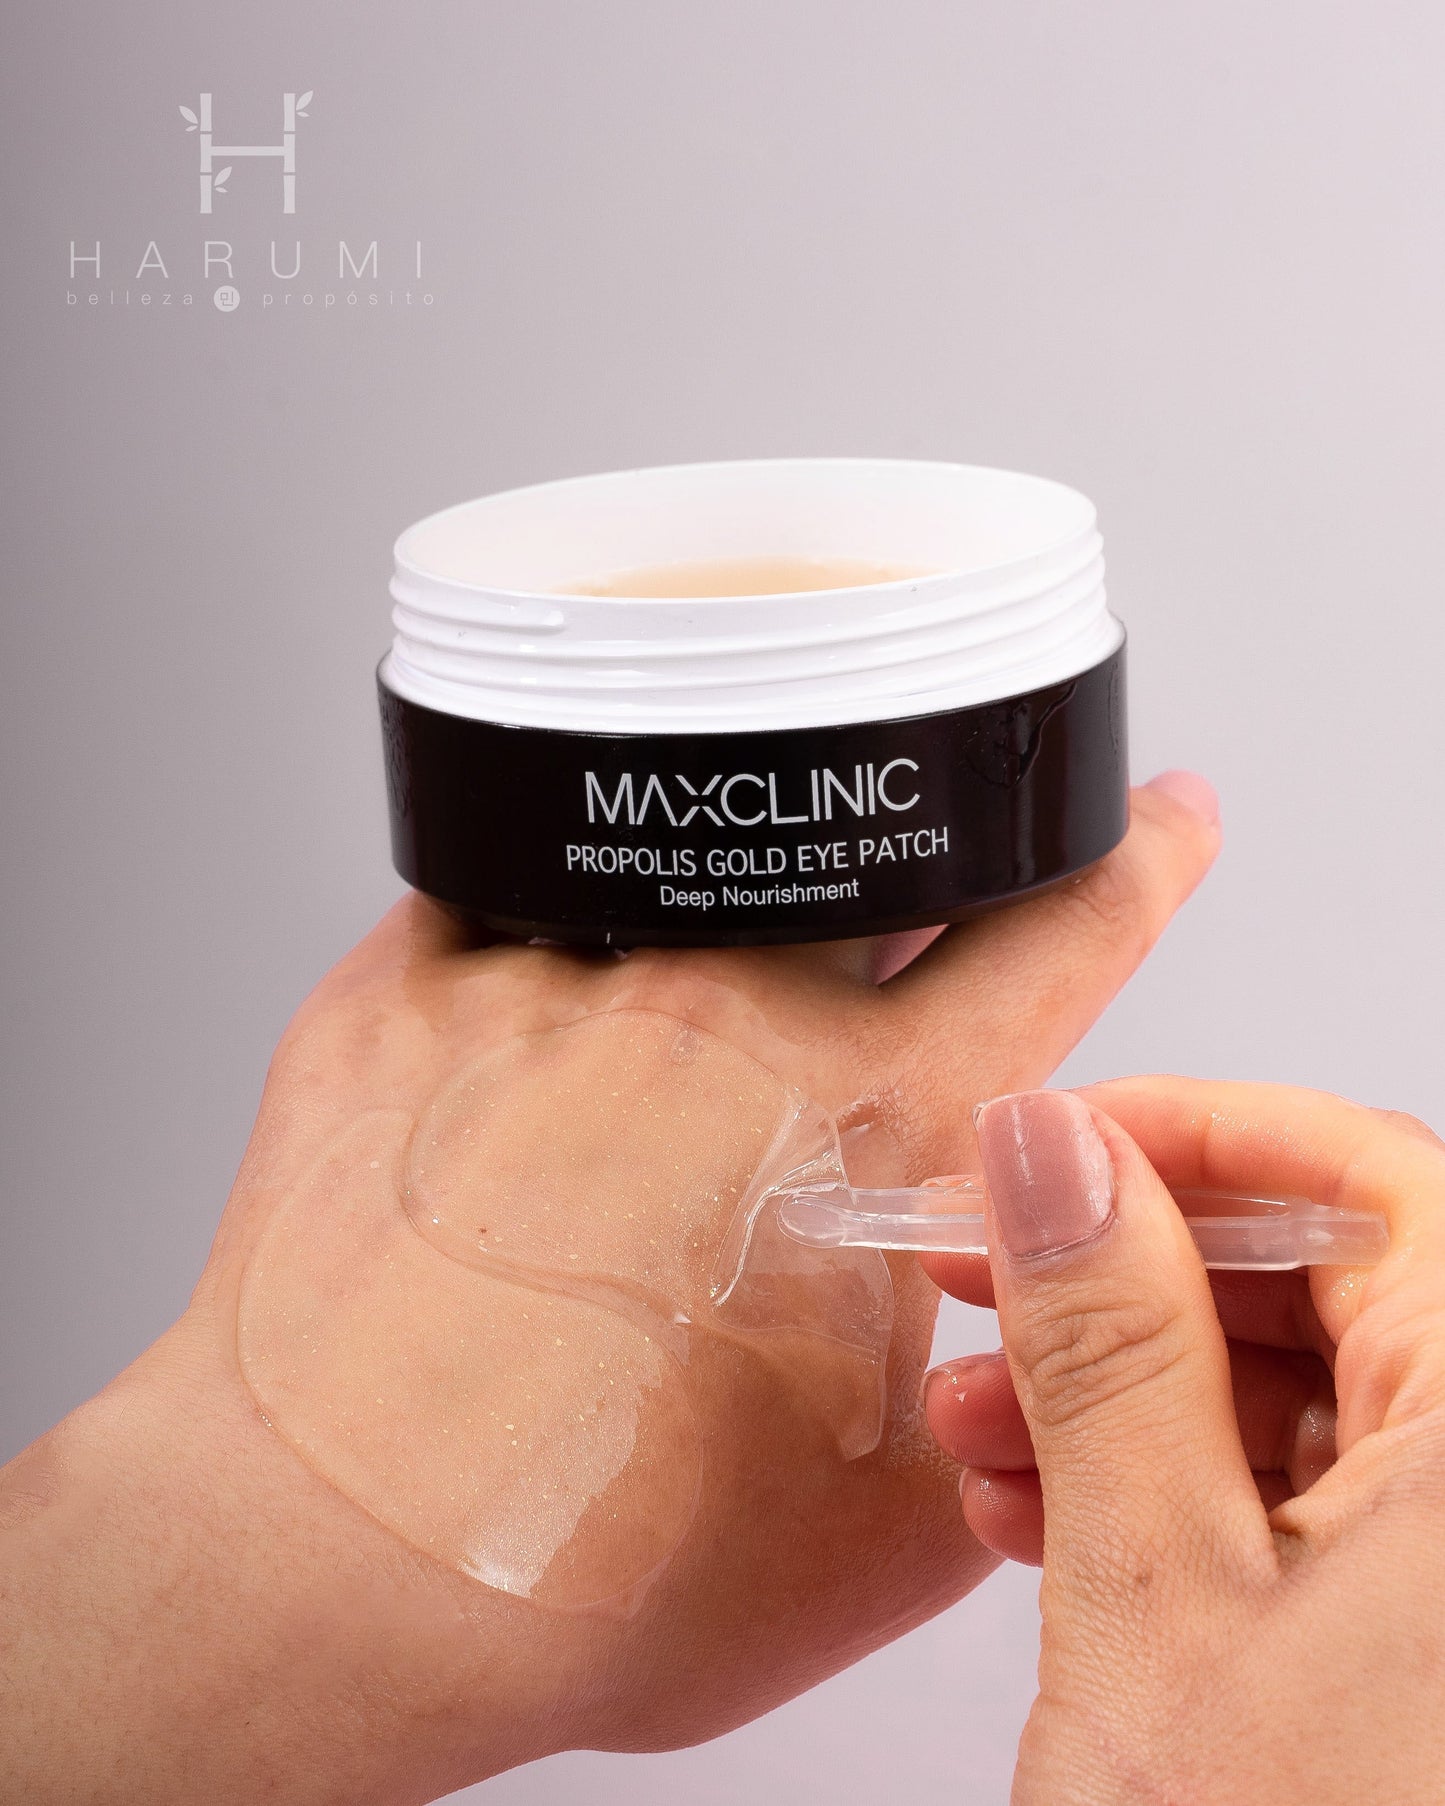 Maxclinic Propolis Gold Eye Patch Skincare maquillaje productos de belleza coreanos en Colombia kbeauty